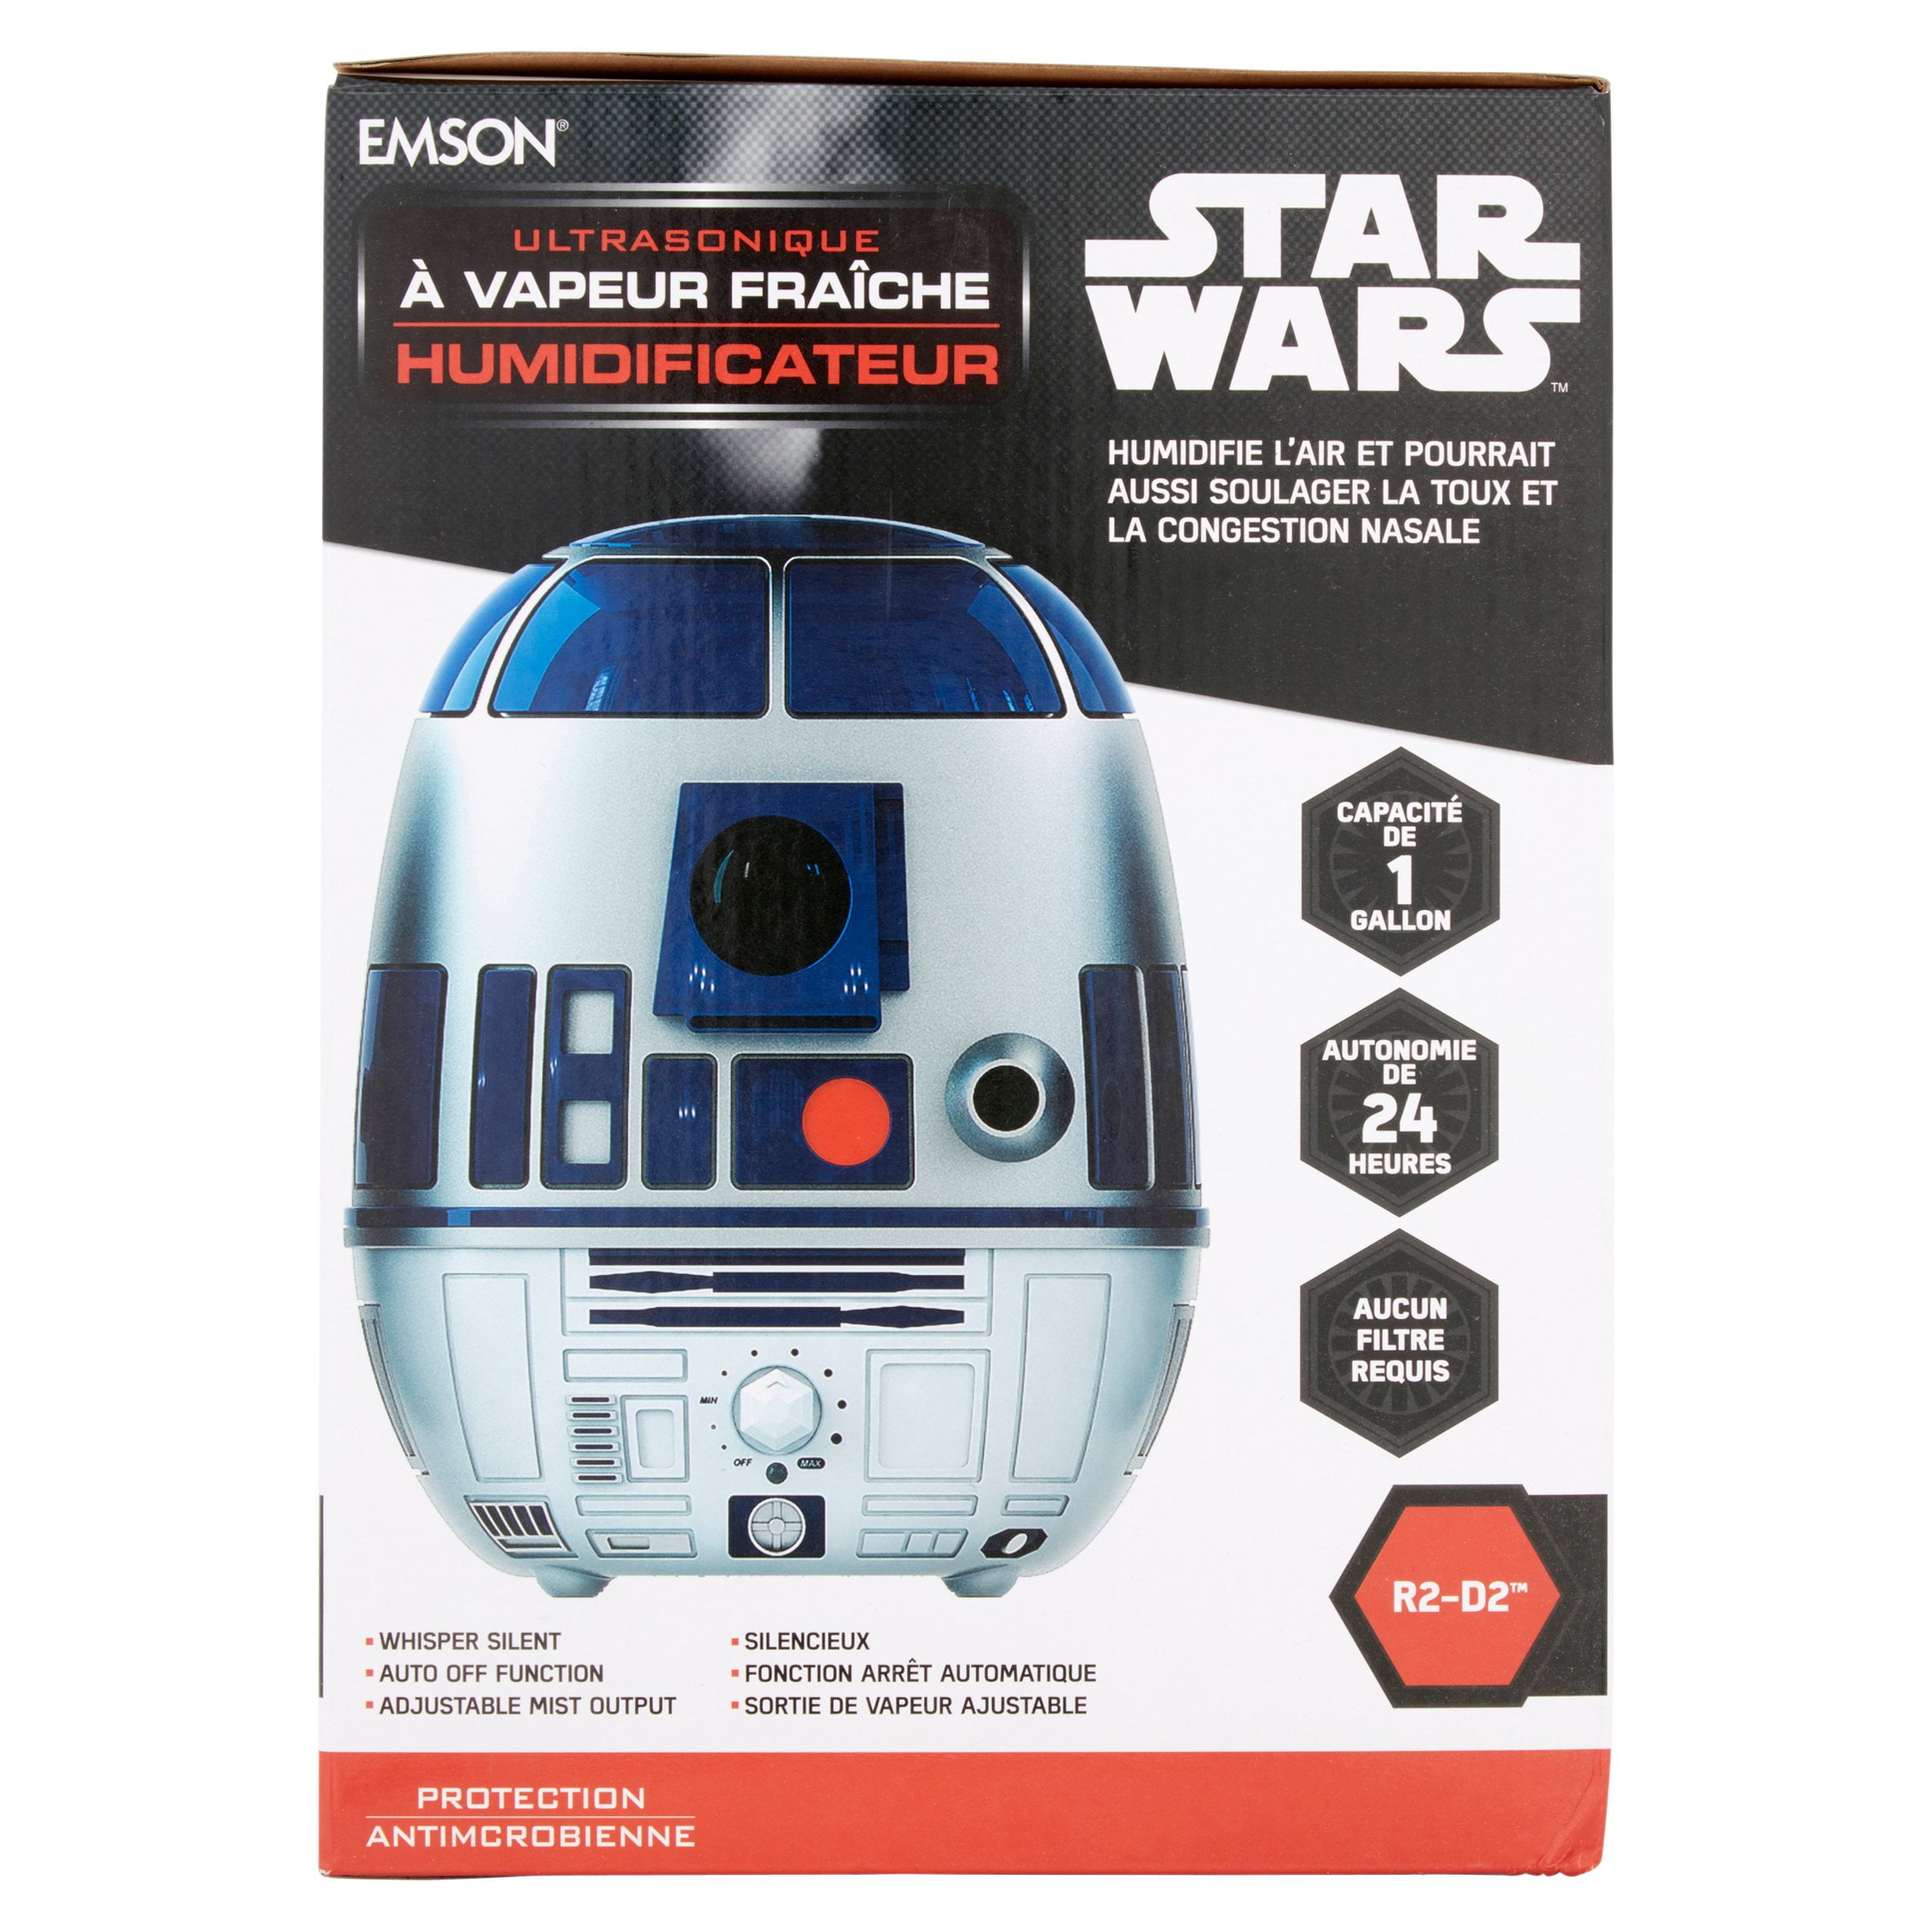 Night Light Projector Star Wars R2-D2 Emson 11" Ultrasonic Cool Mist Humidifier 